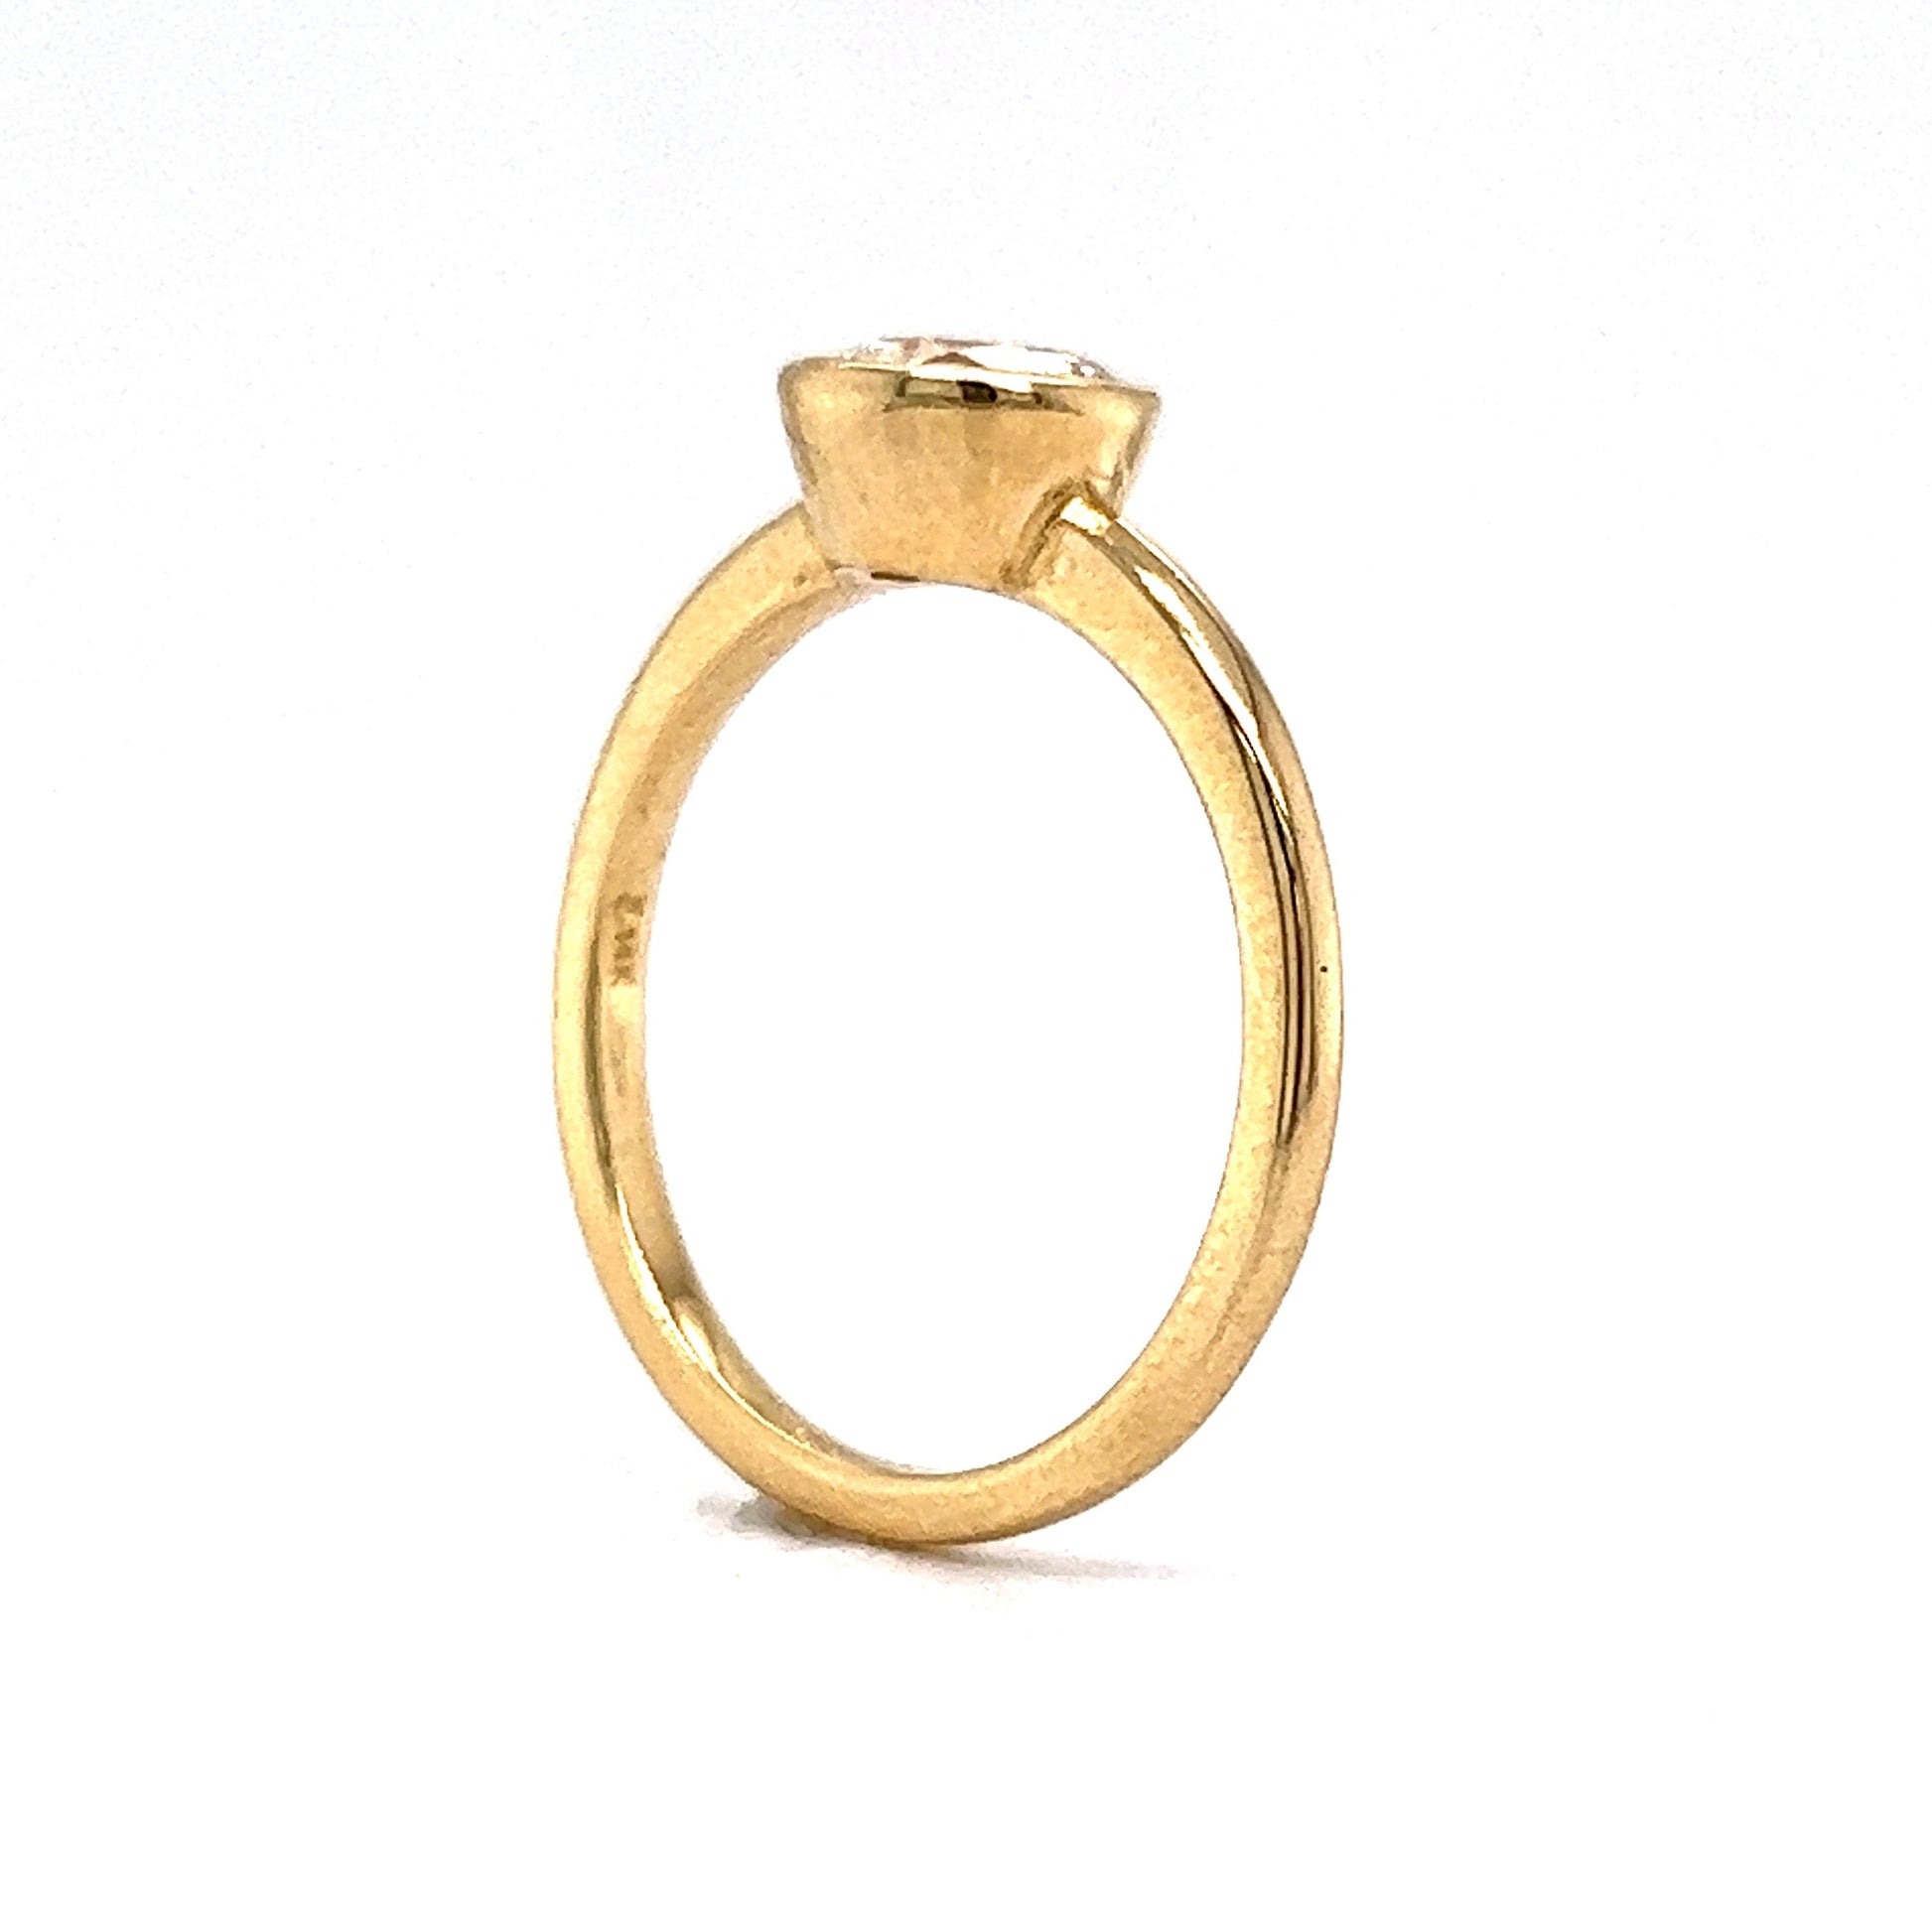 .88 Classic Bezel Set Diamond Engagement Ring in 14k Yellow Gold